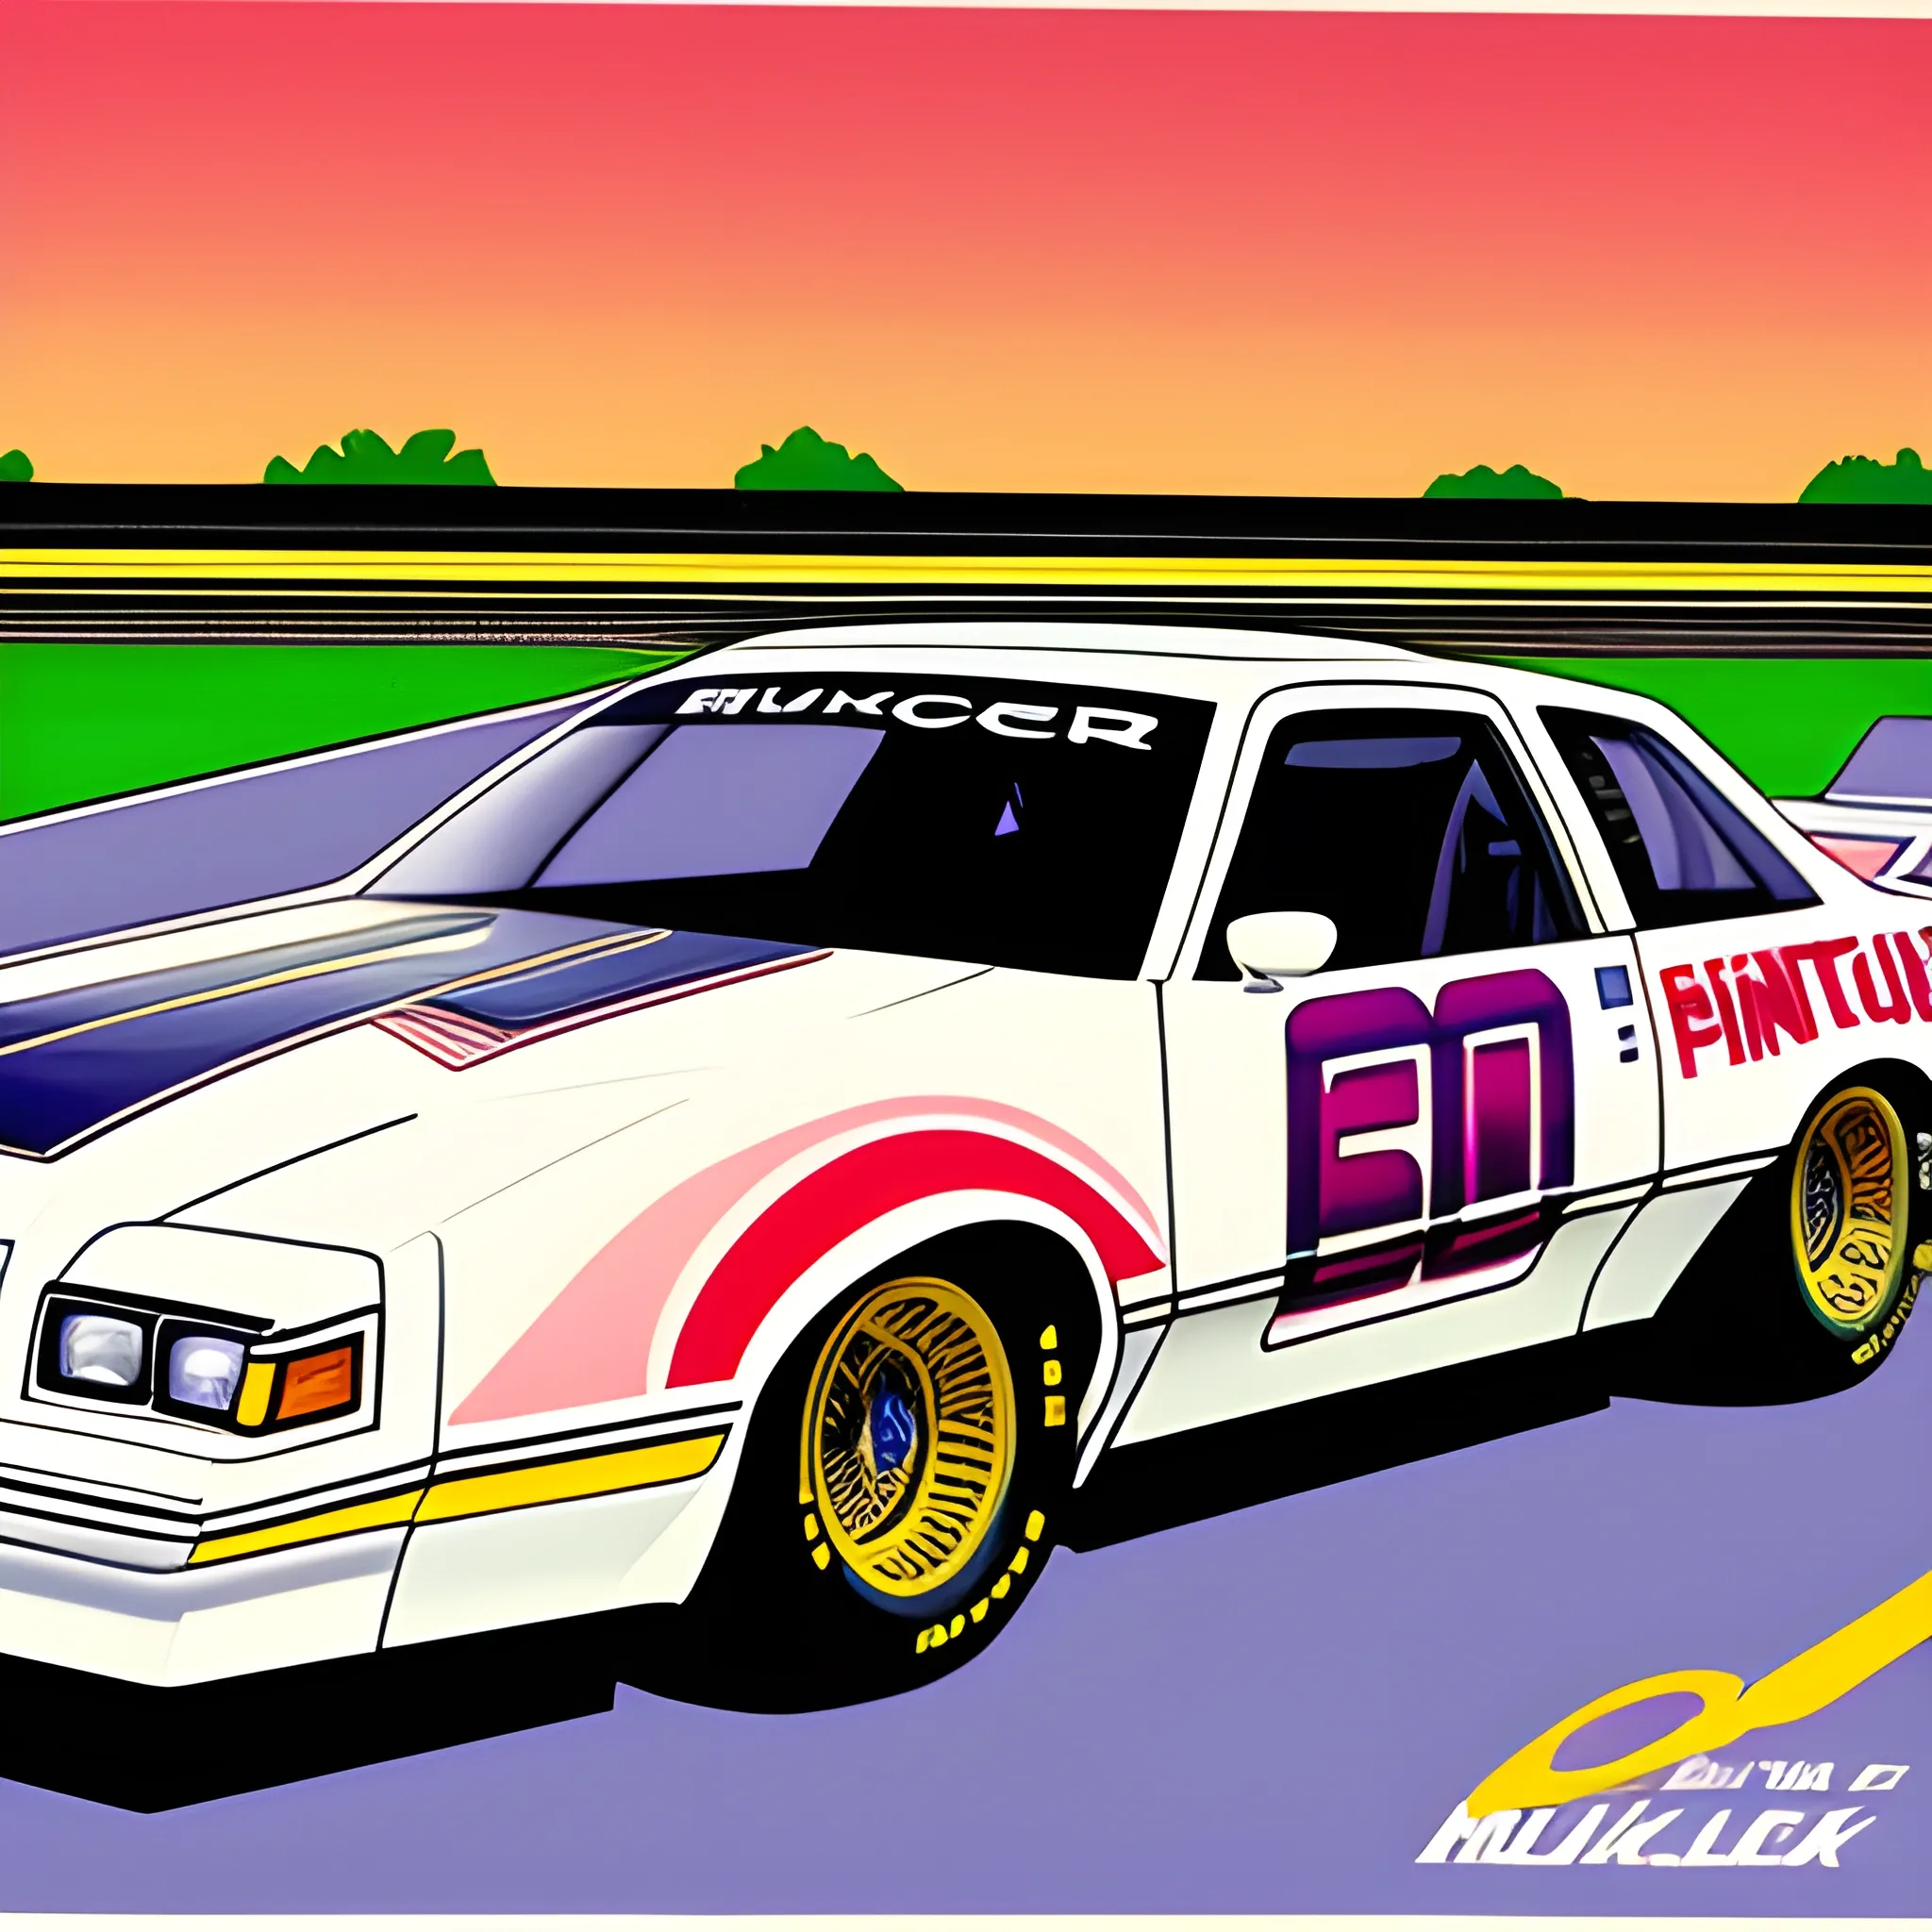 1980s Buick race car illustration 